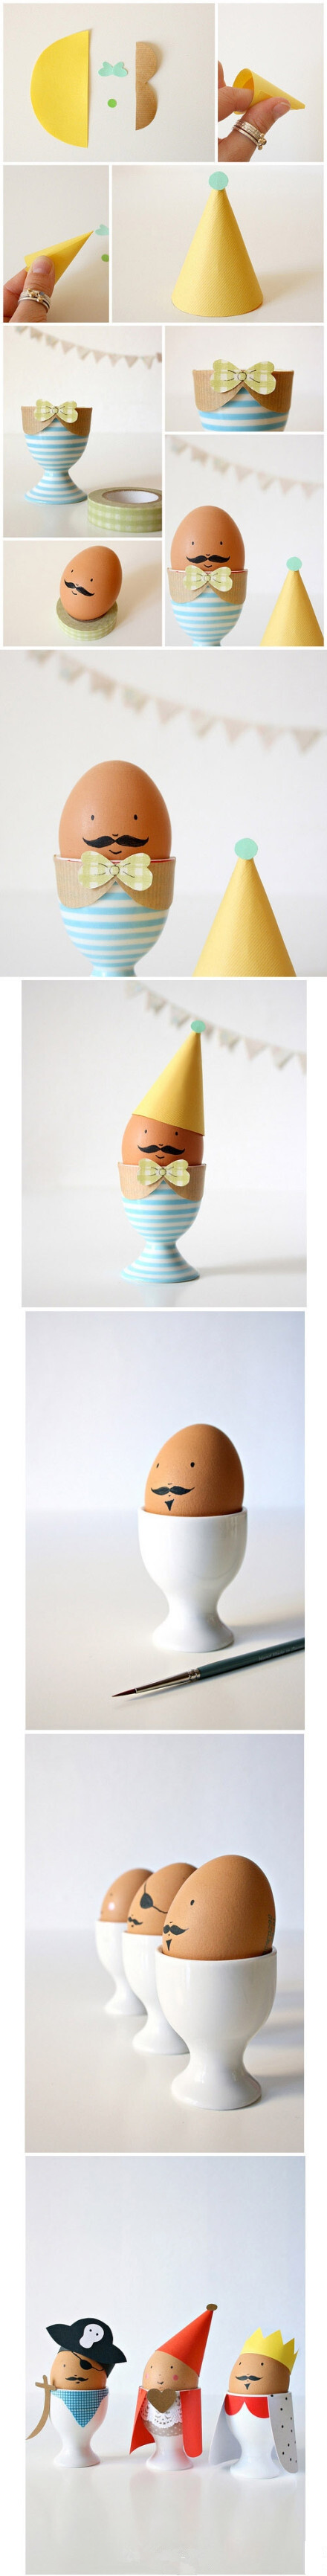 dress your egg,创意有趣的鸡蛋造型设计